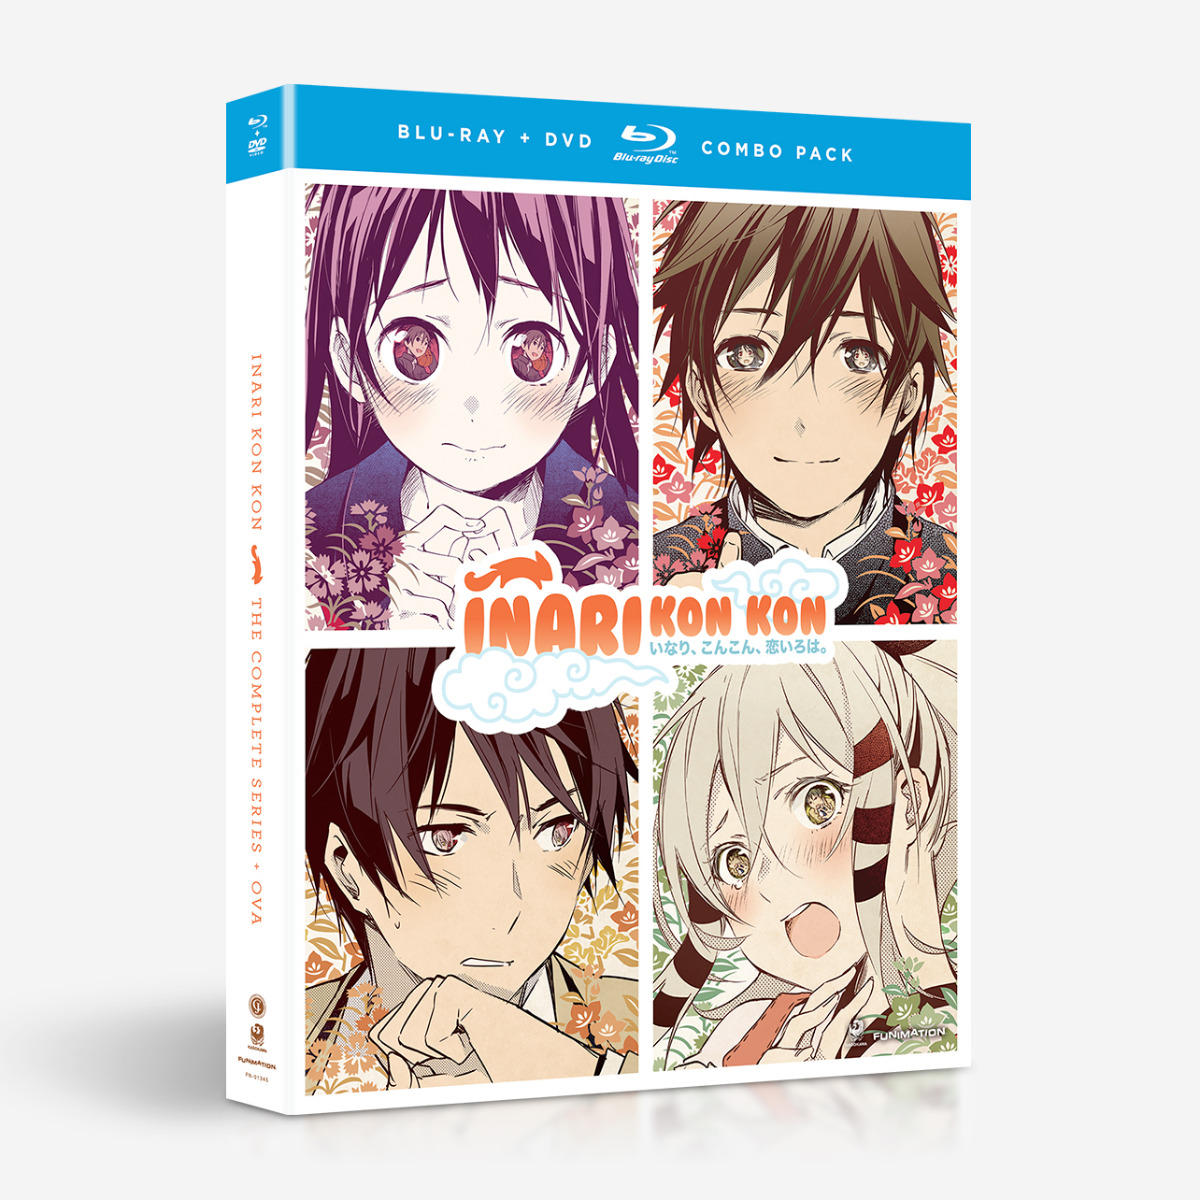 Inari Kon Kon - The Complete Series - Blu-ray + DVD image count 0